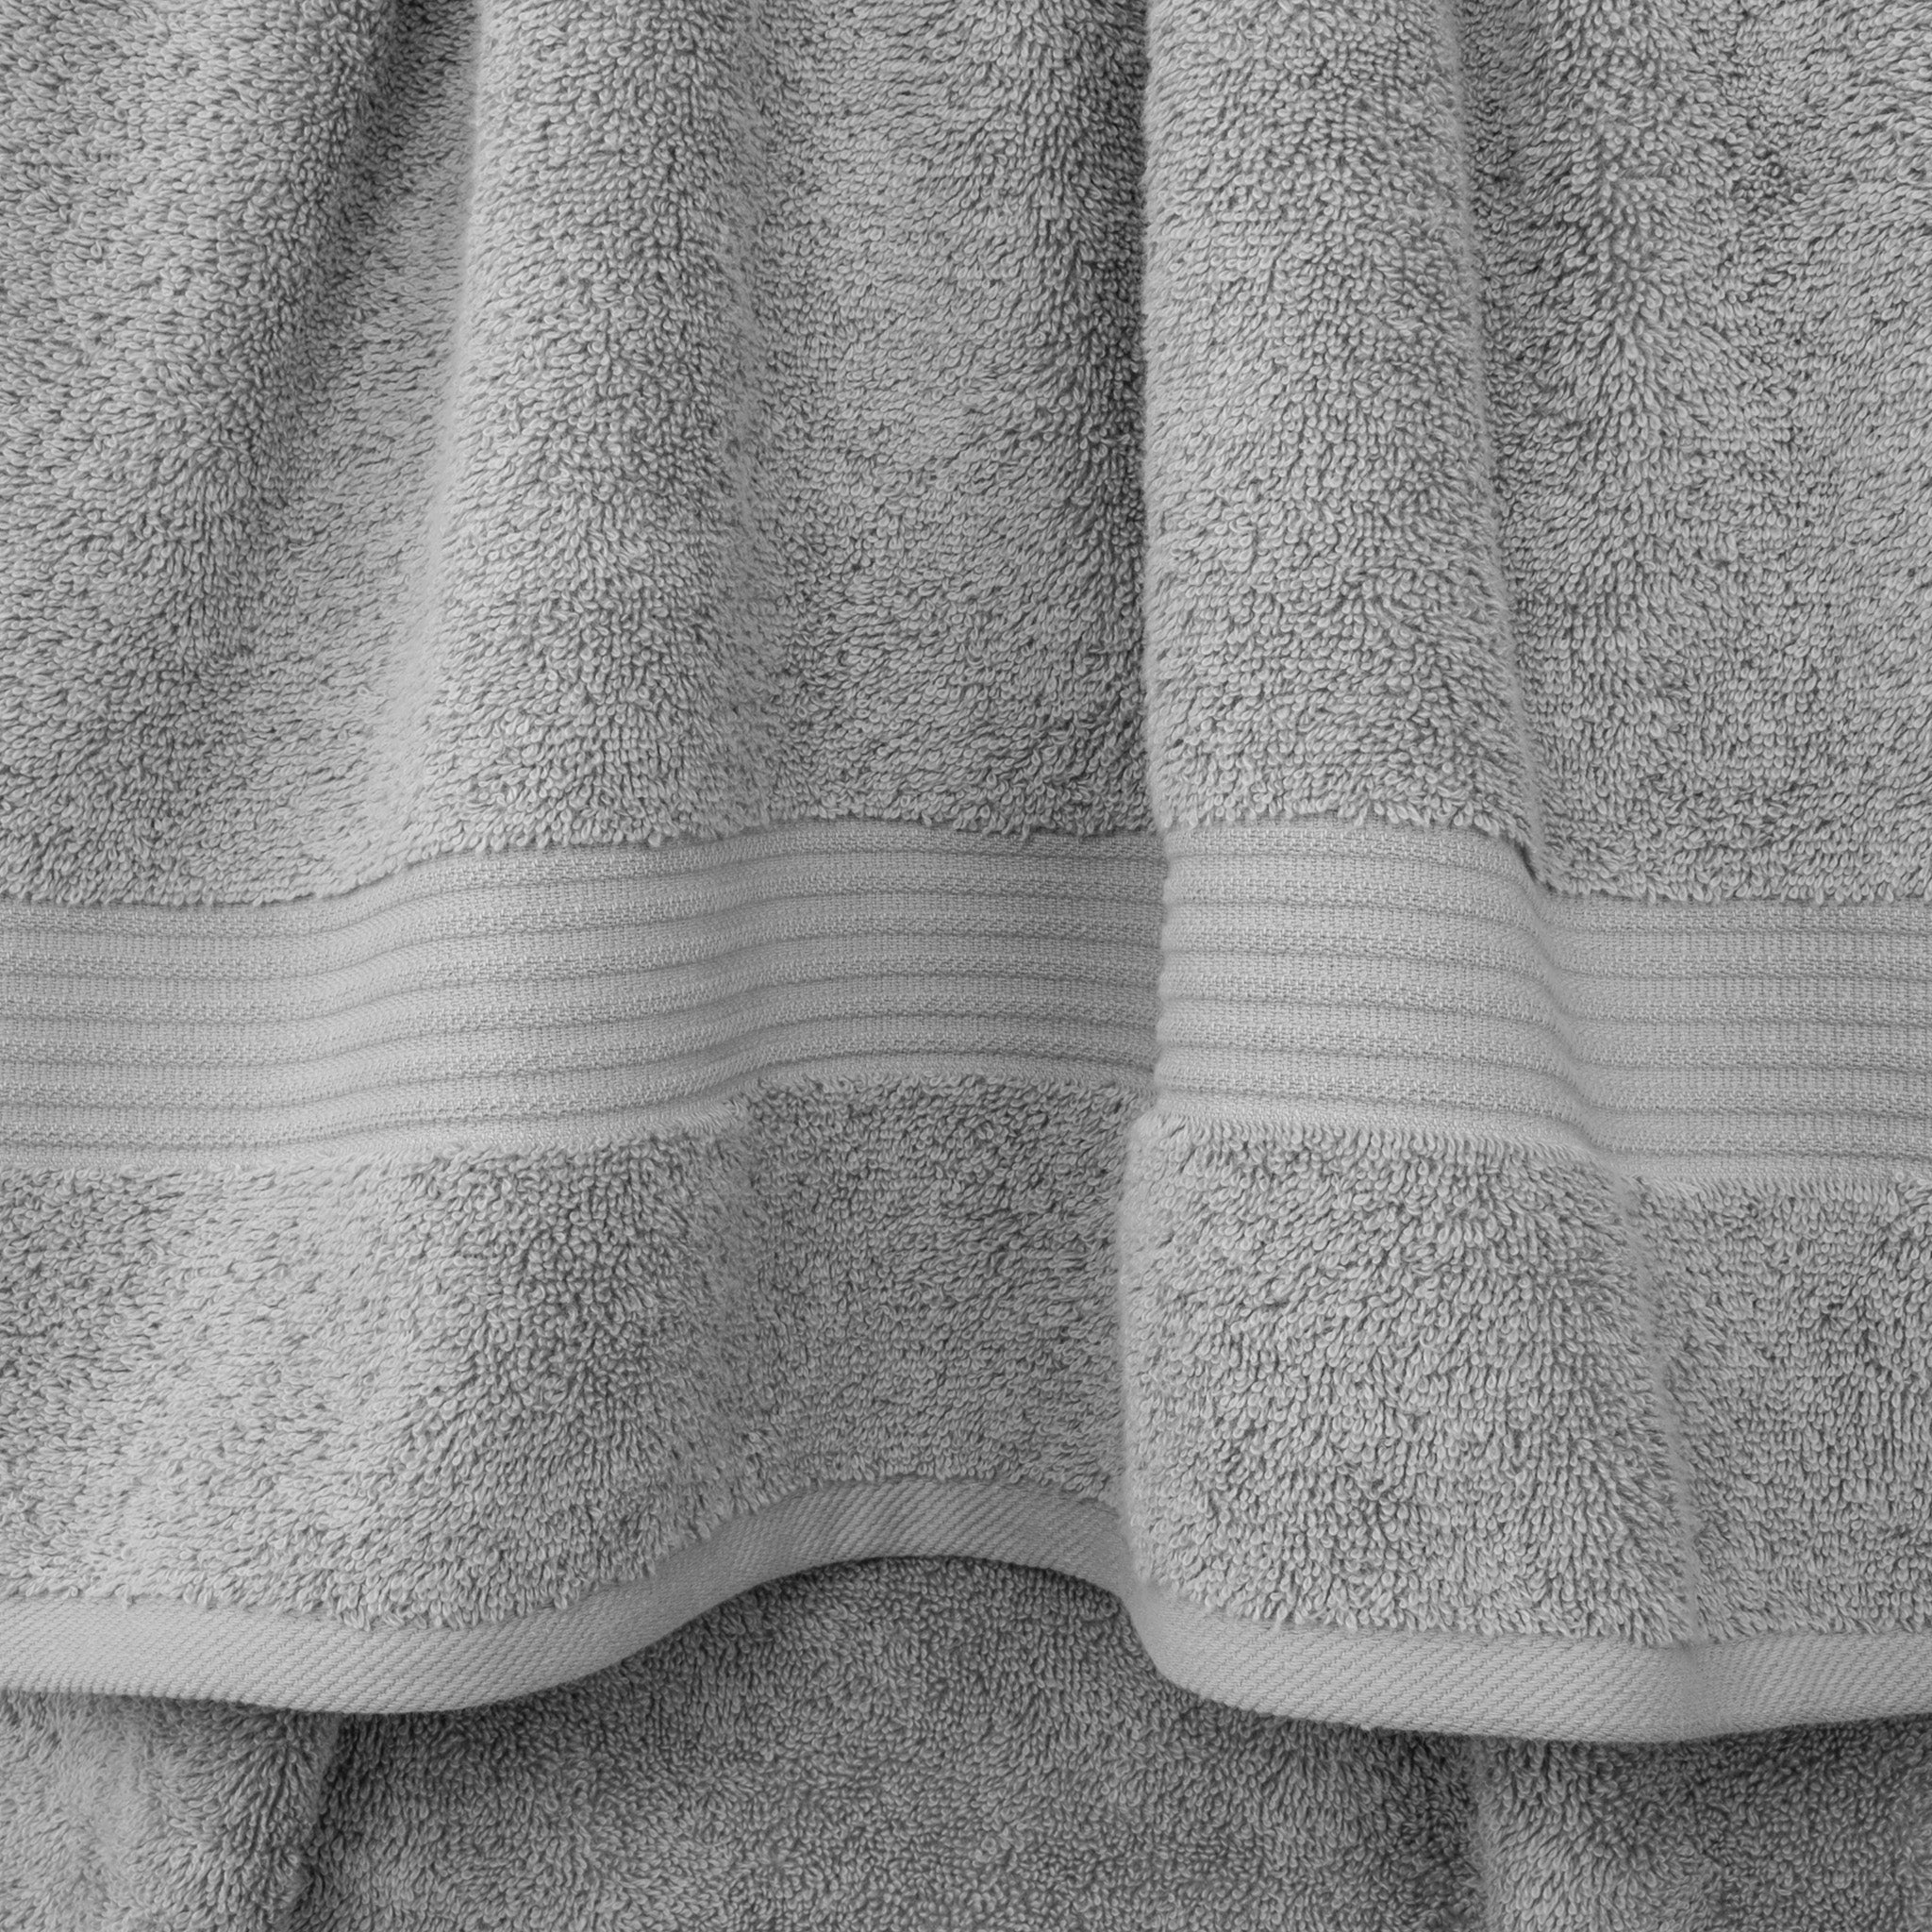 American Soft Linen Bekos 100% Cotton Turkish Towels 6 Piece Bath Towel Set -rockridge-gray-03